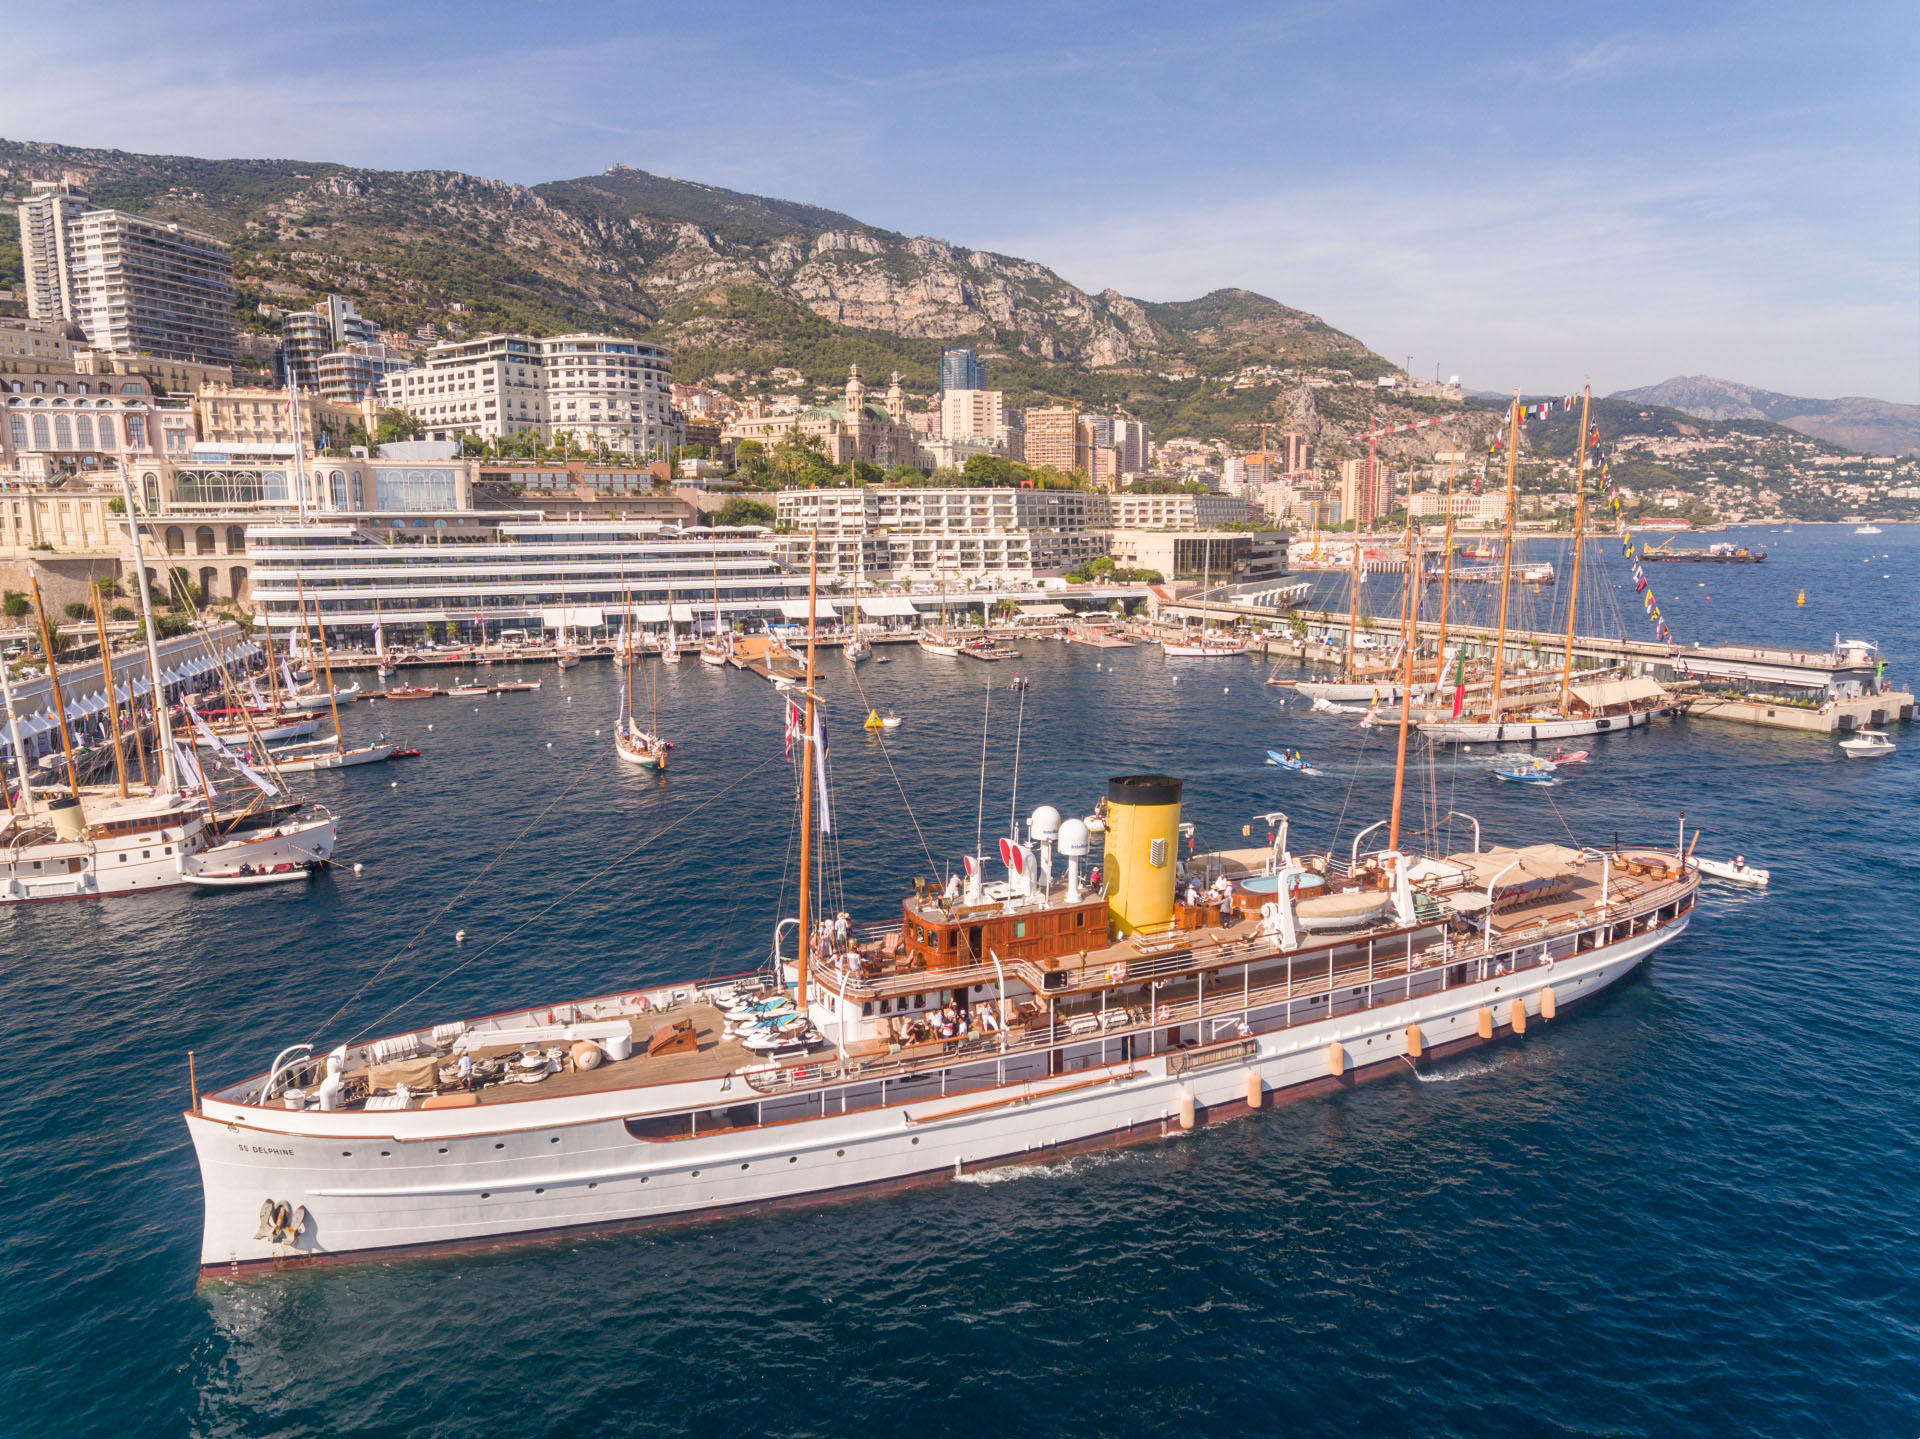 File:Symphony Yacht Monaco IMG 1176.jpg - Wikimedia Commons